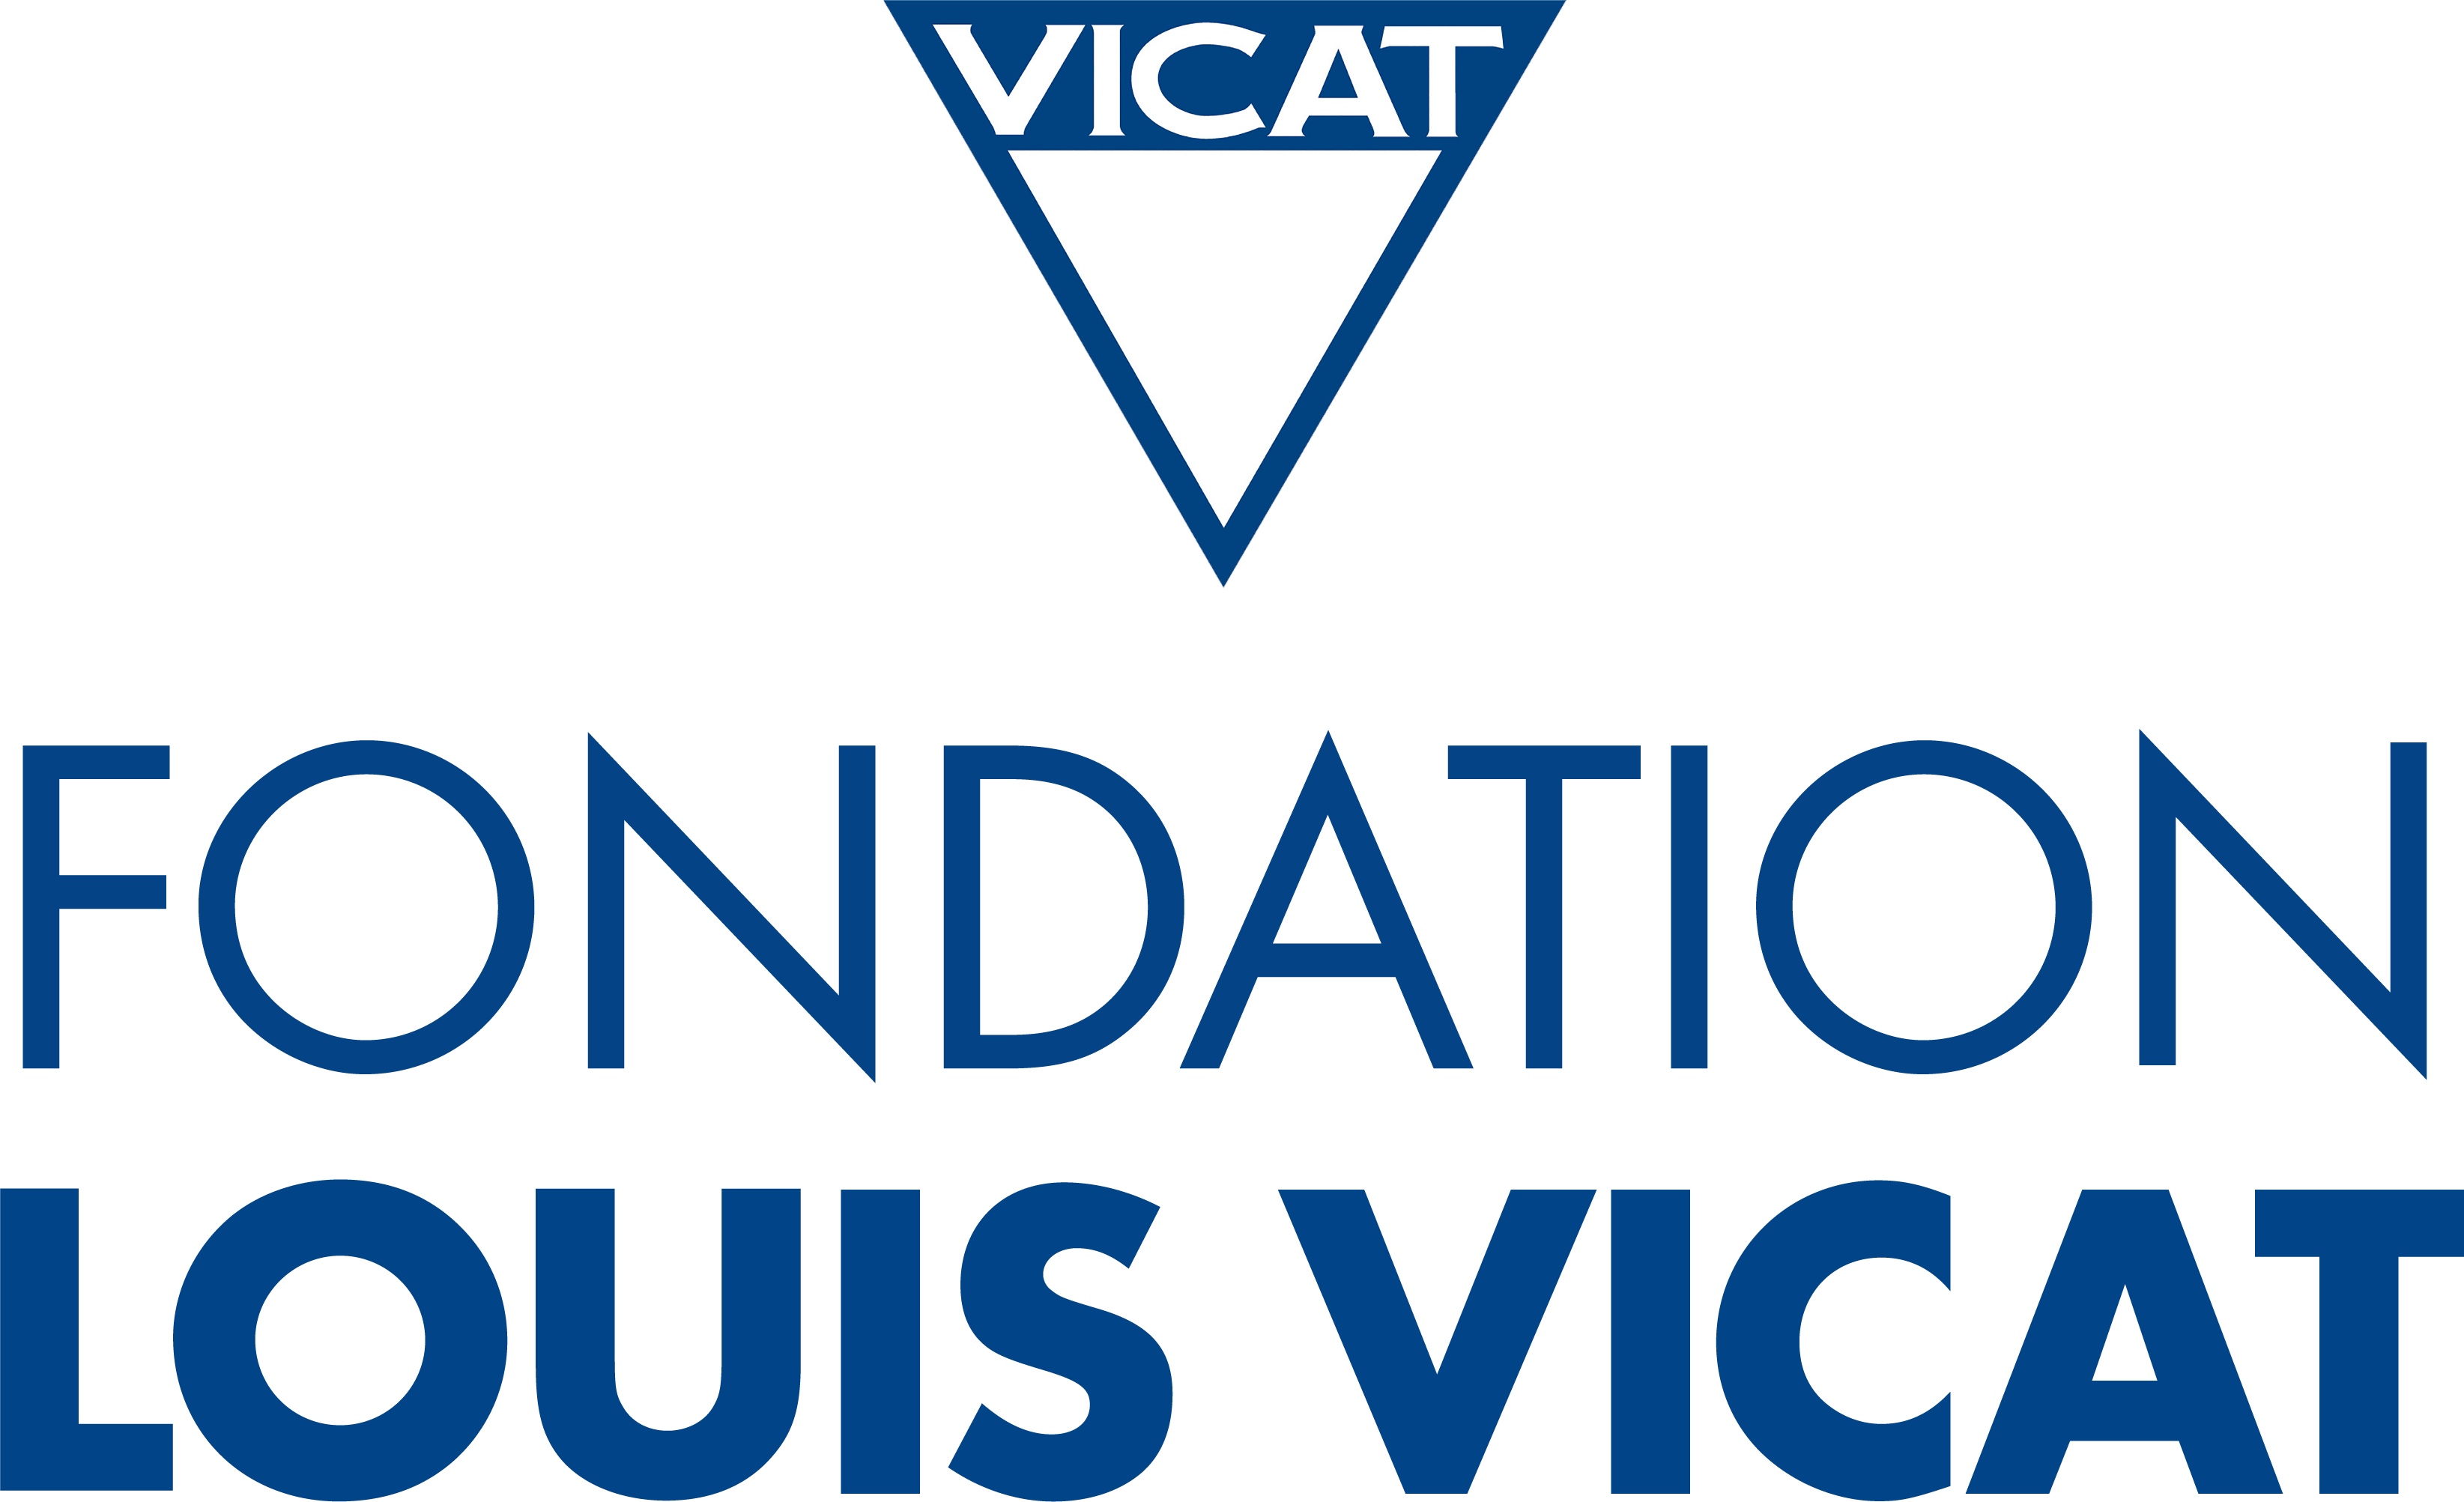 FONDATION LOUIS VICAT_Logo.png